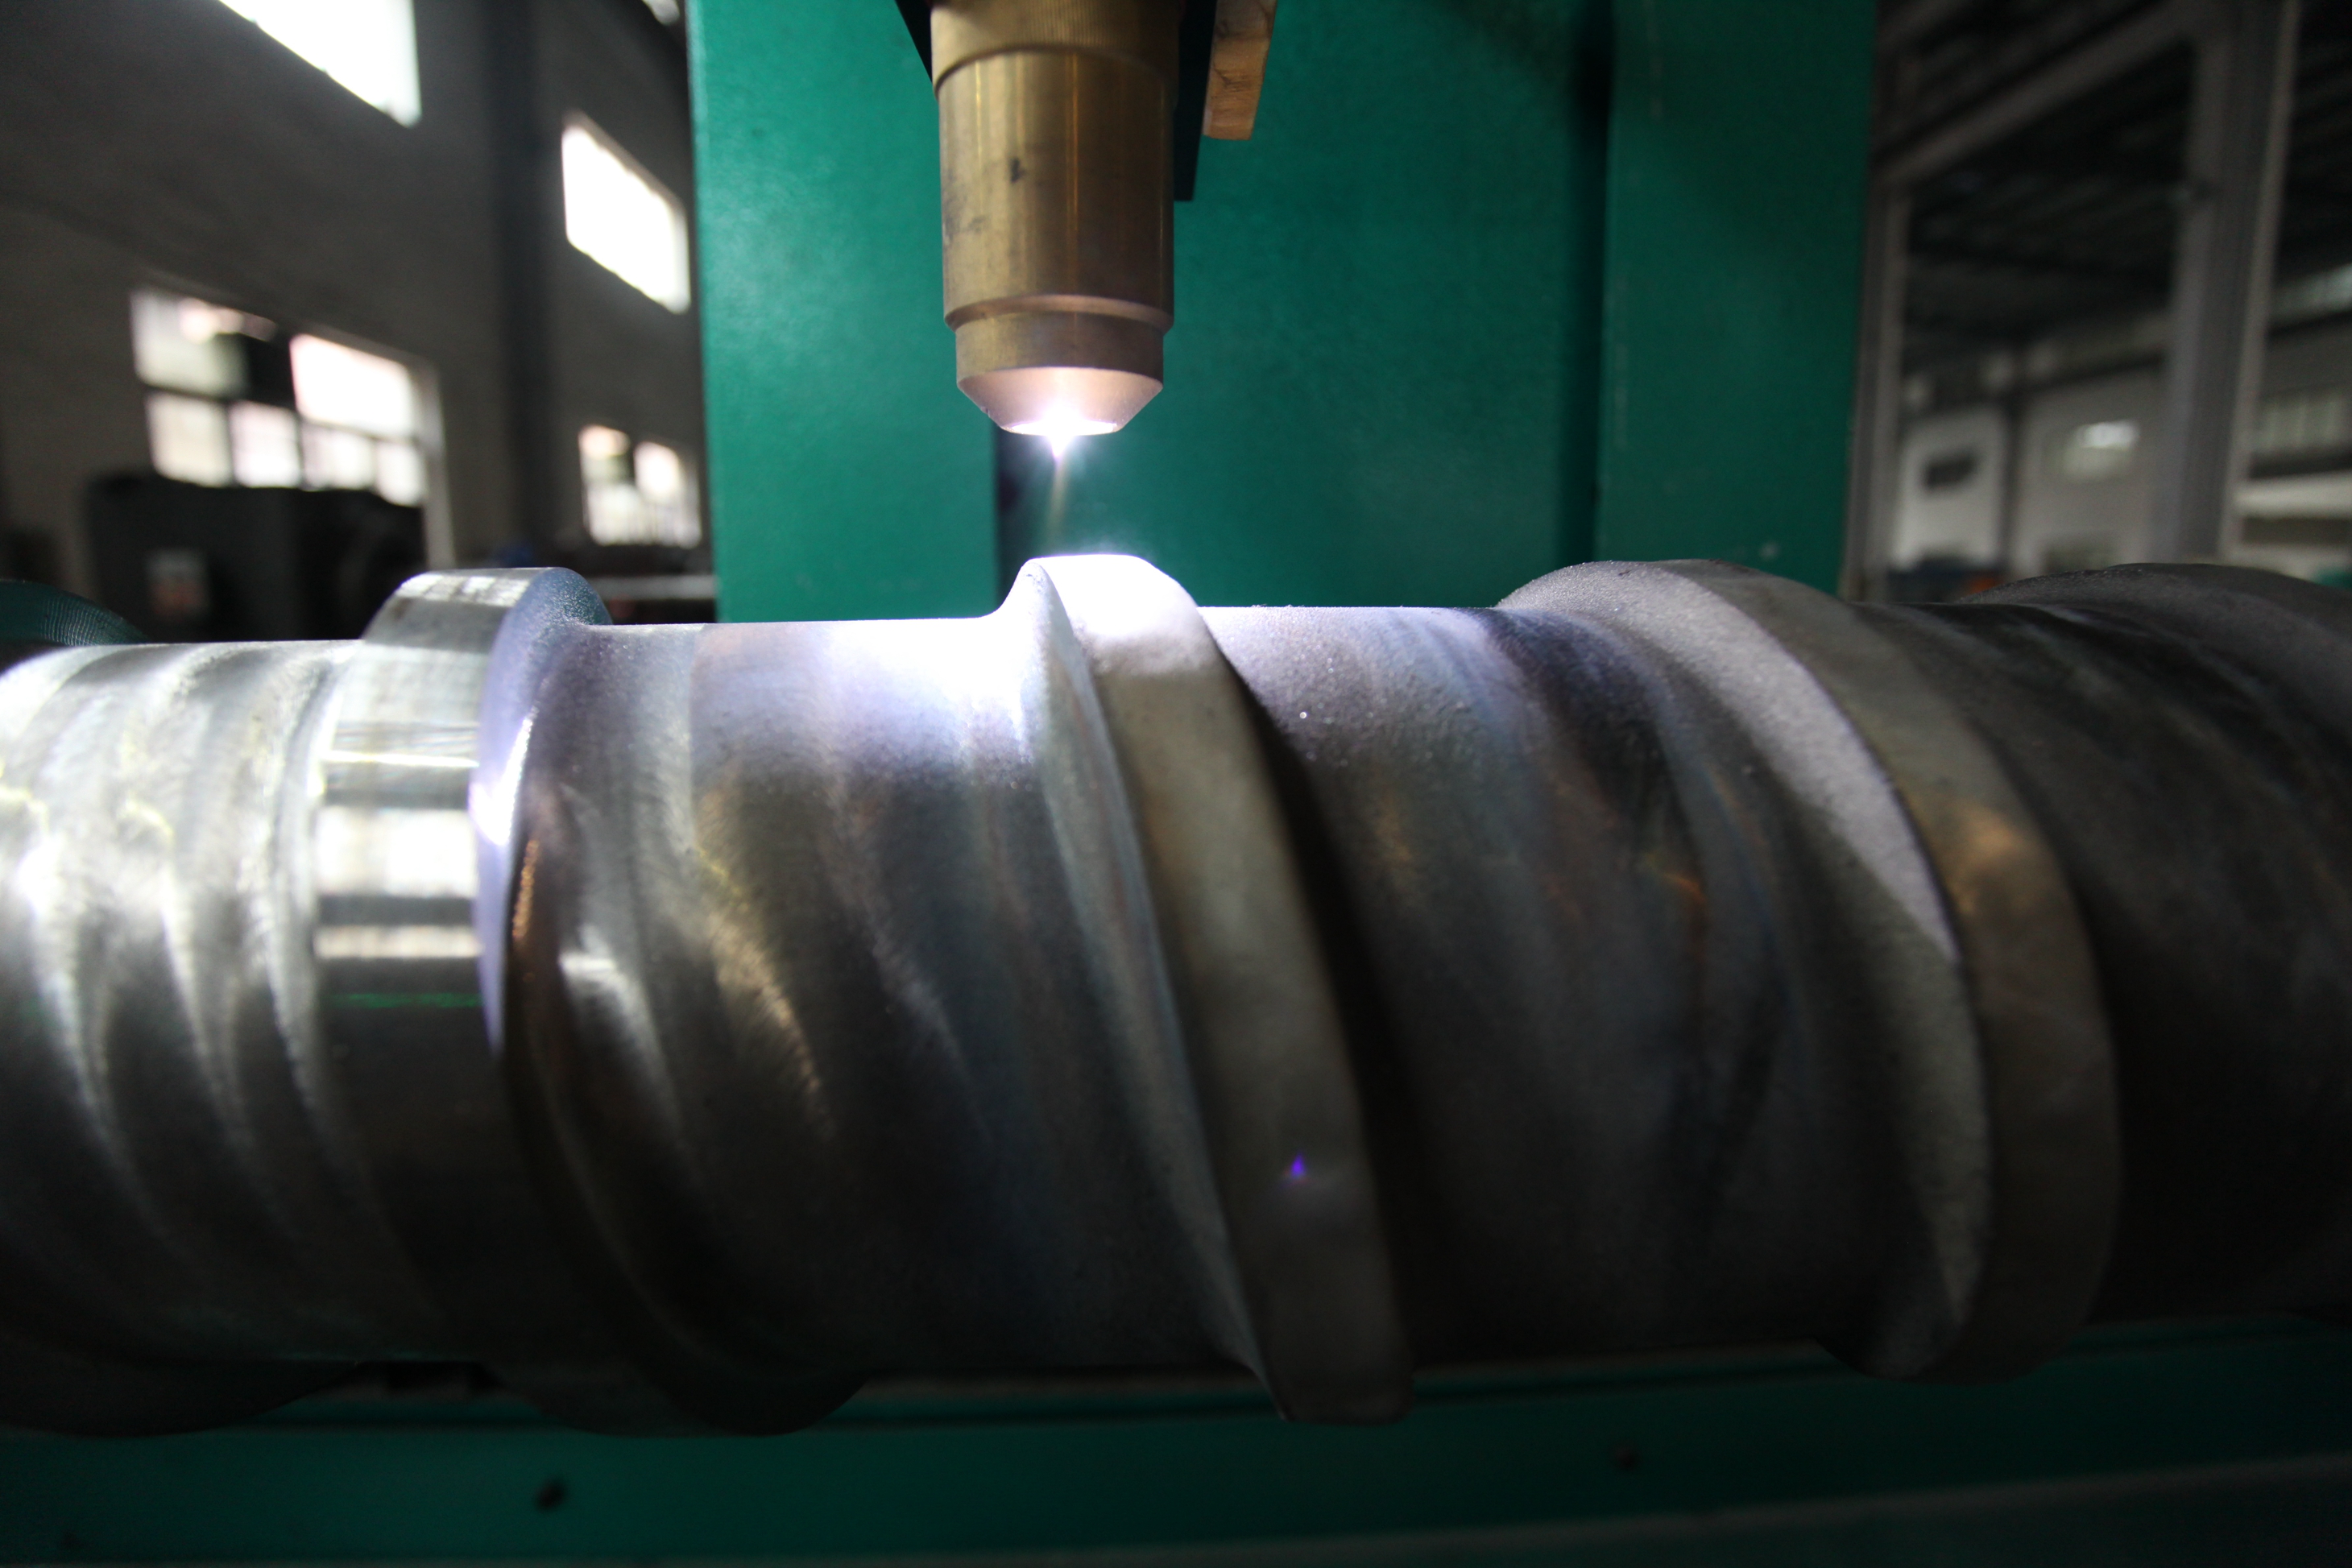 single screw extruding machine bimetallic cylinder